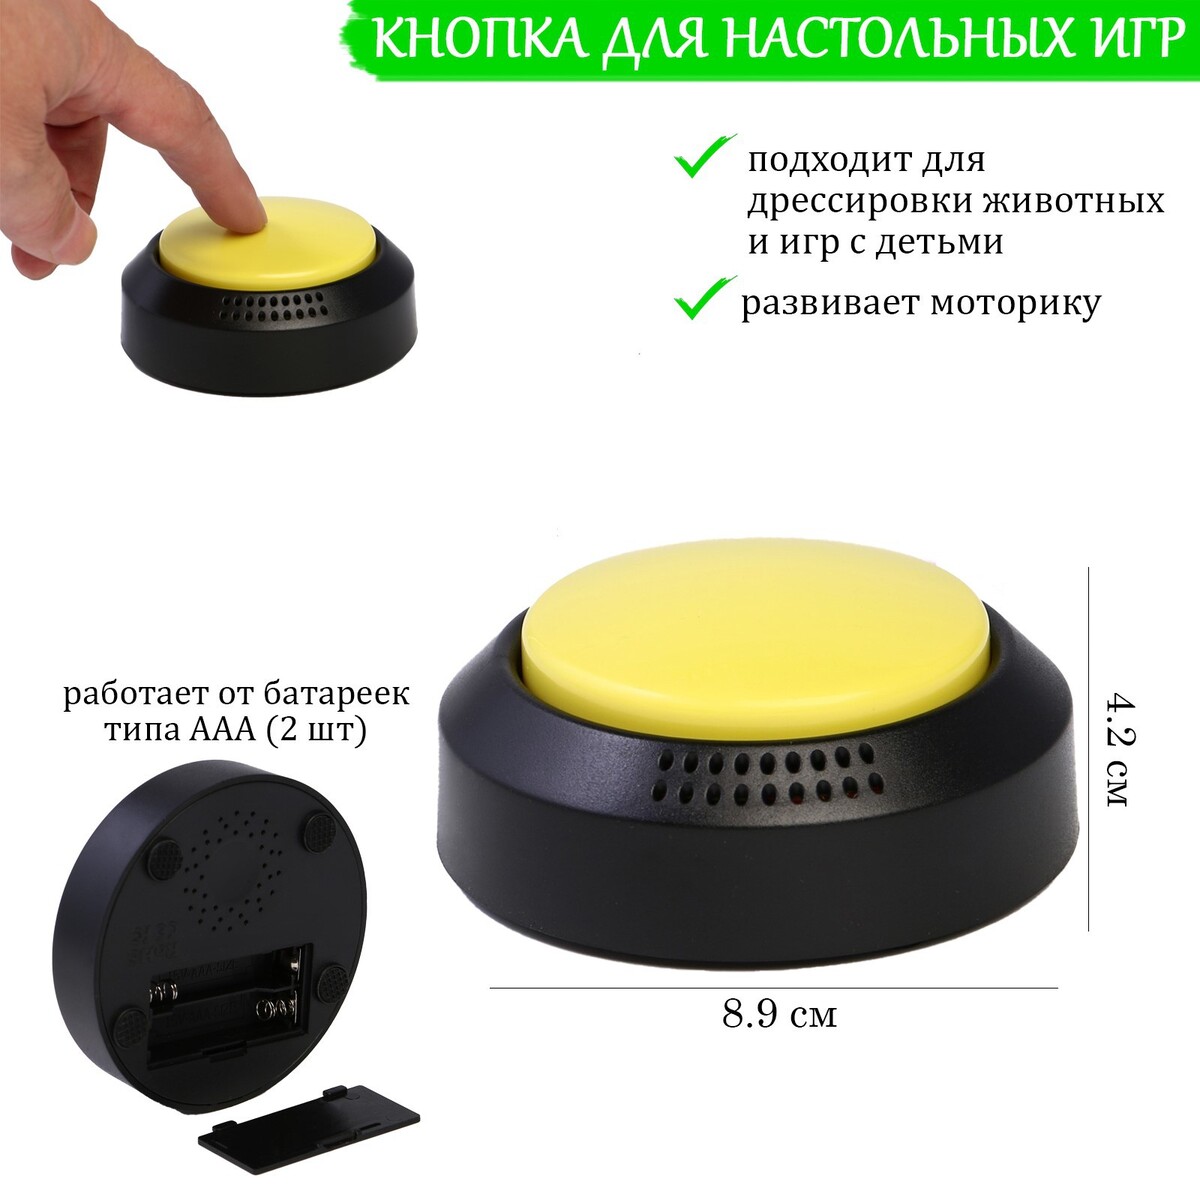 Кнопка для игр, 2 ааа, 8.9 х 4.2 см, желтая